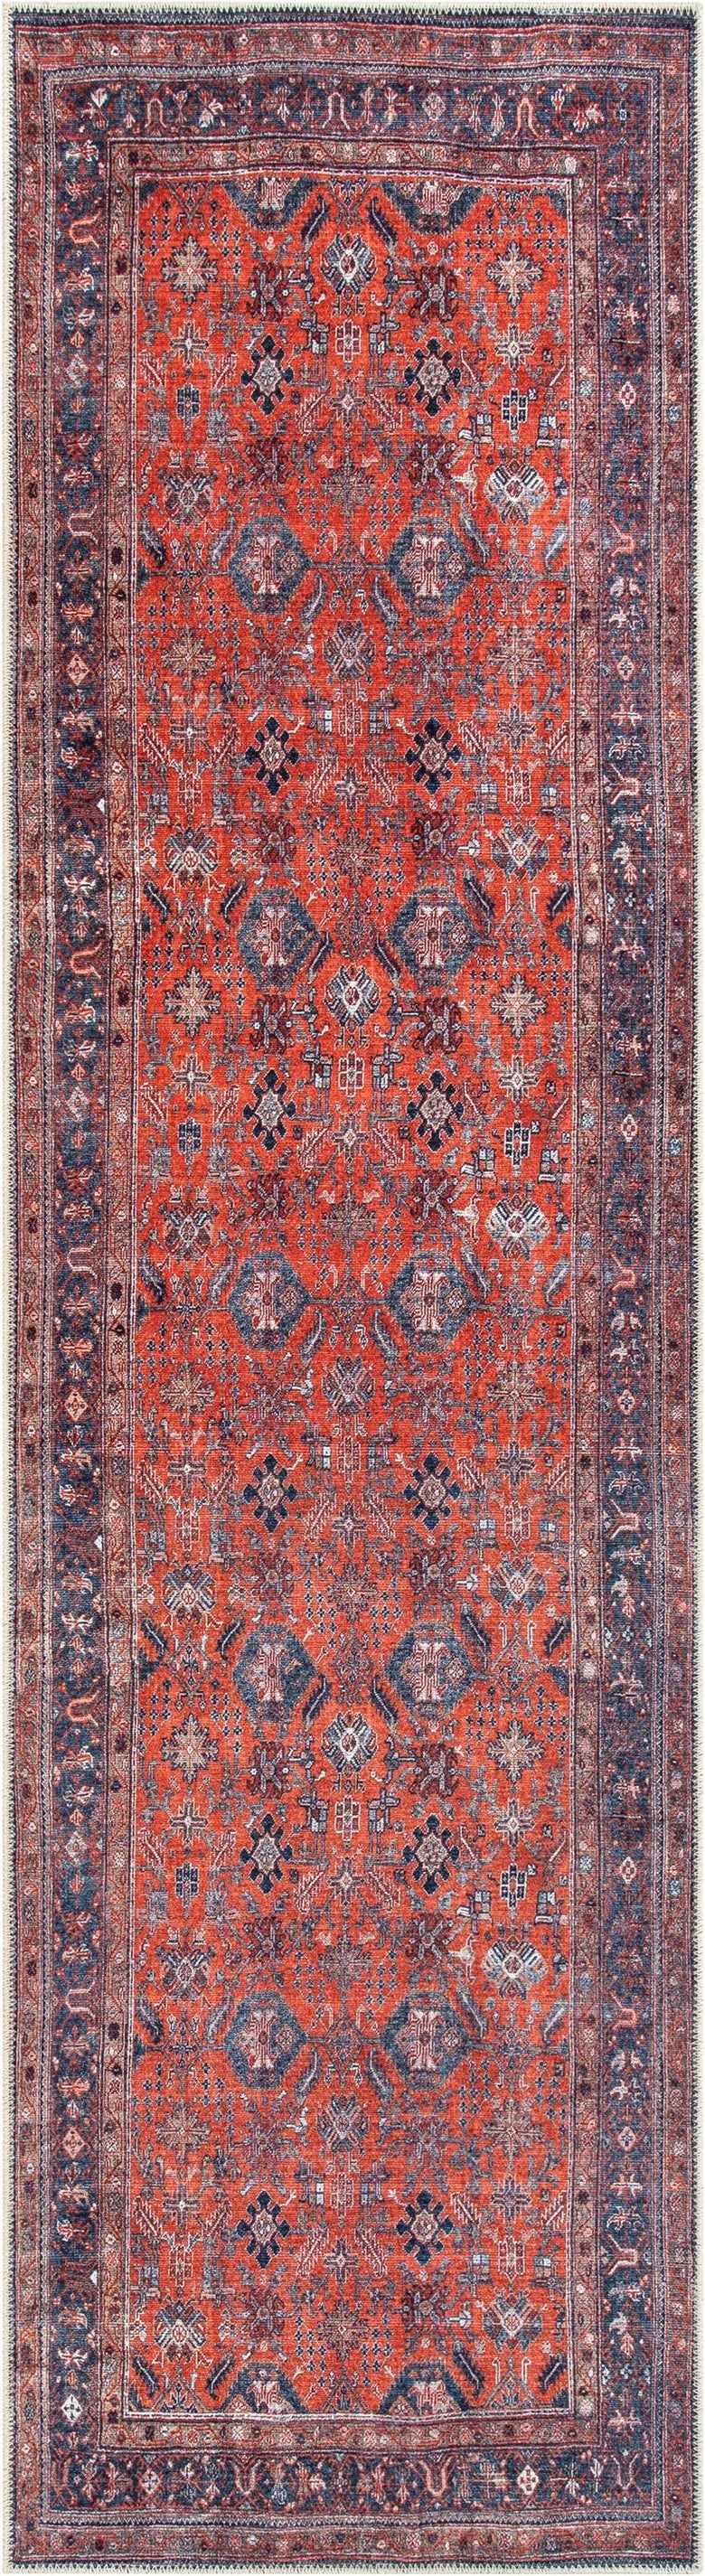 Daliah Machine Washable Vintage Persian Oriental Red Flat-Weave Rug LOT-240-